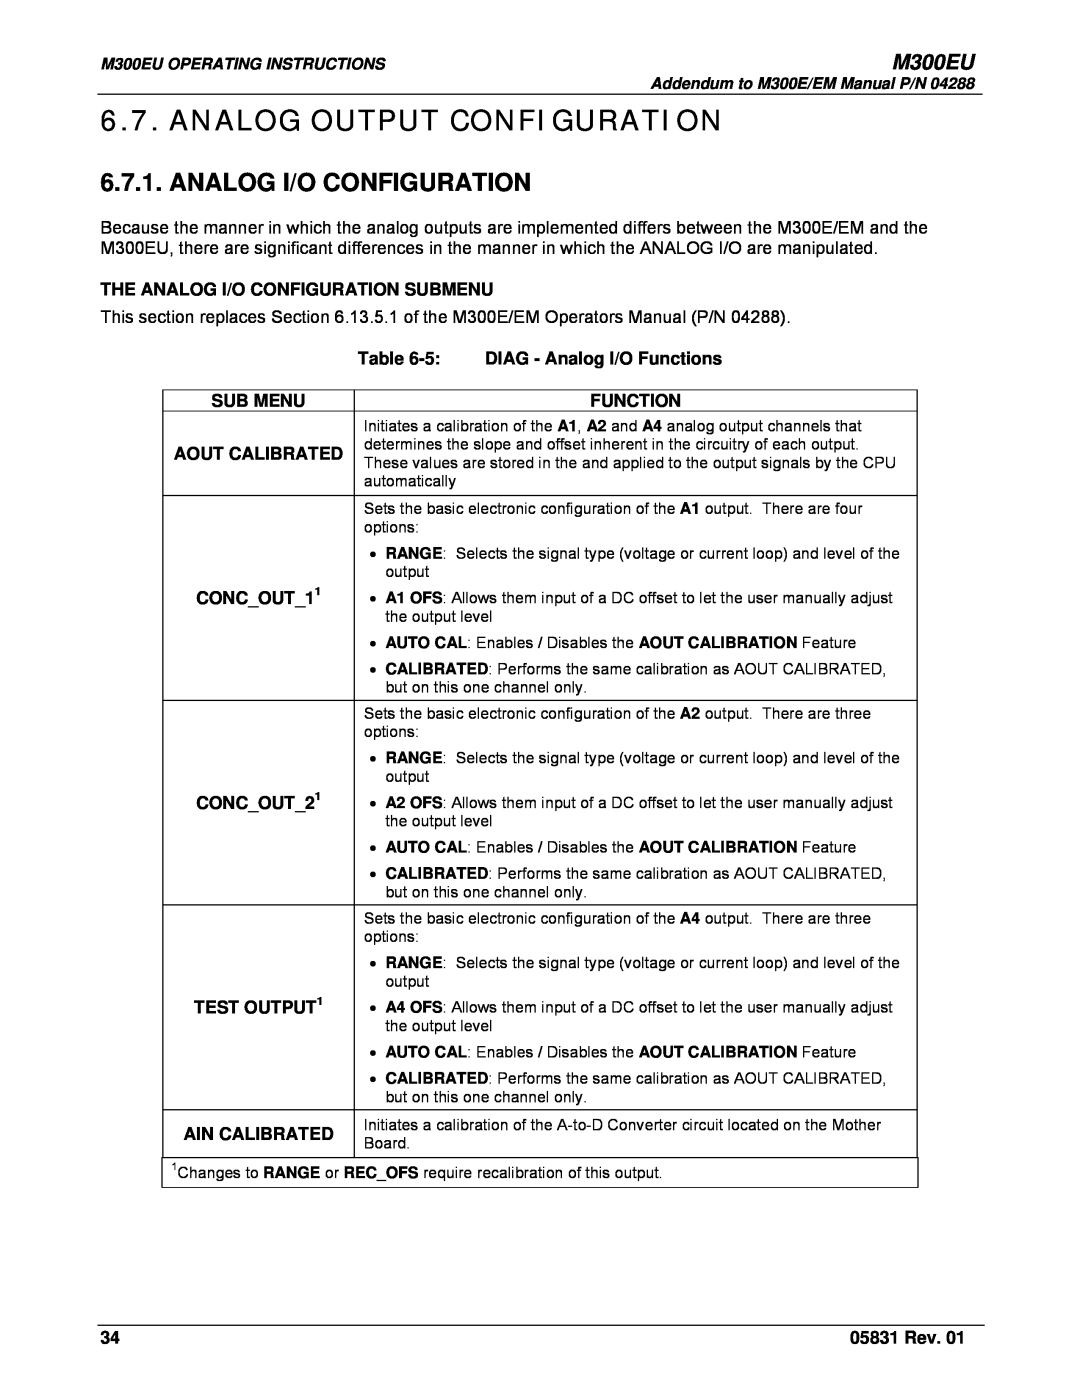 Teledyne Model 300EU Analog Output Configuration, M300EU, The Analog I/O Configuration Submenu, Sub Menu, Function 